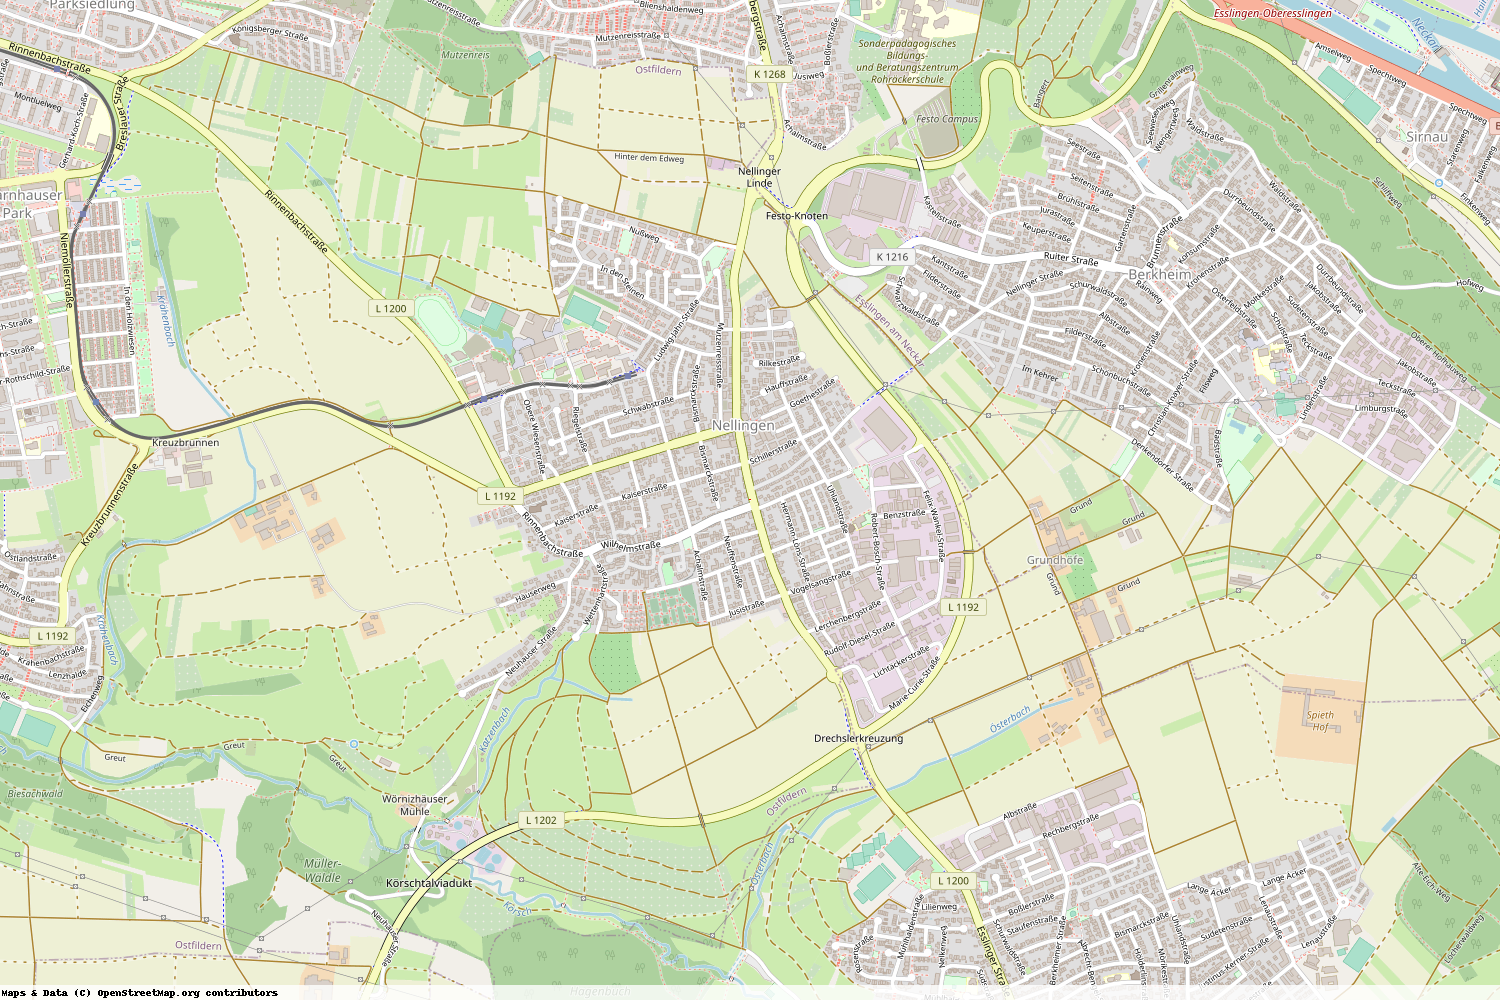 Ist gerade Stromausfall in Baden-Württemberg - Esslingen - Ostfildern?